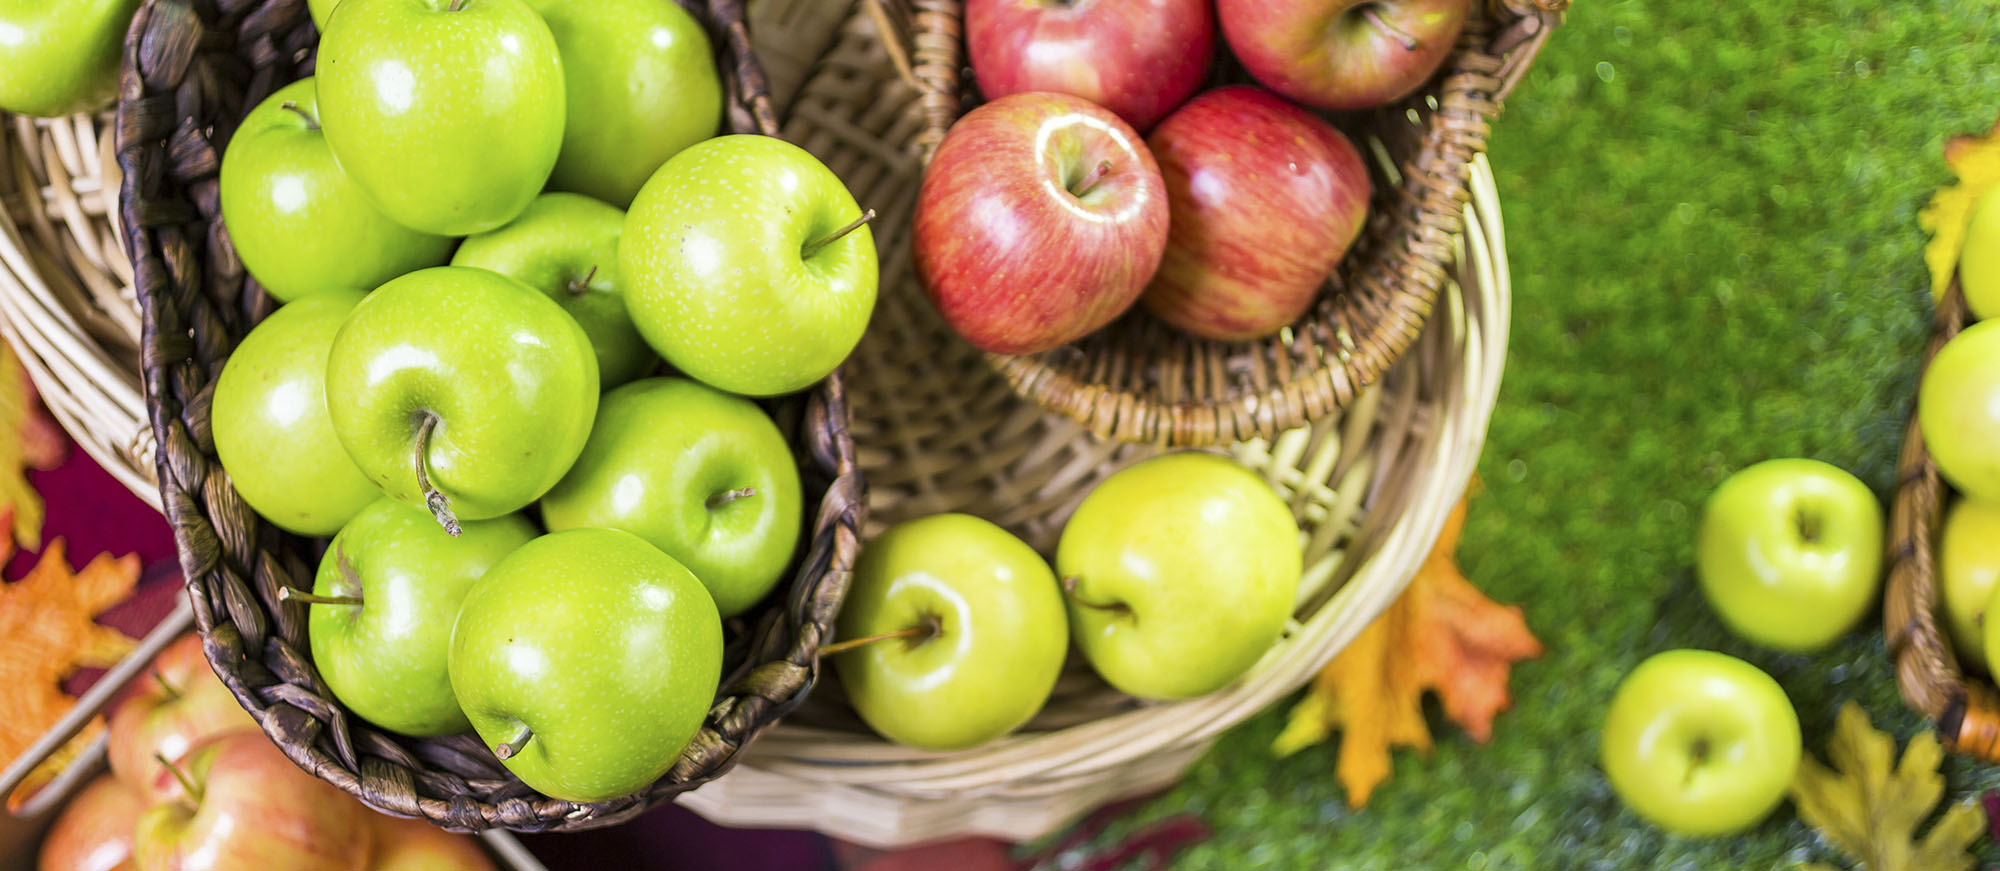 6 Most Popular Portuguese Apples - TasteAtlas